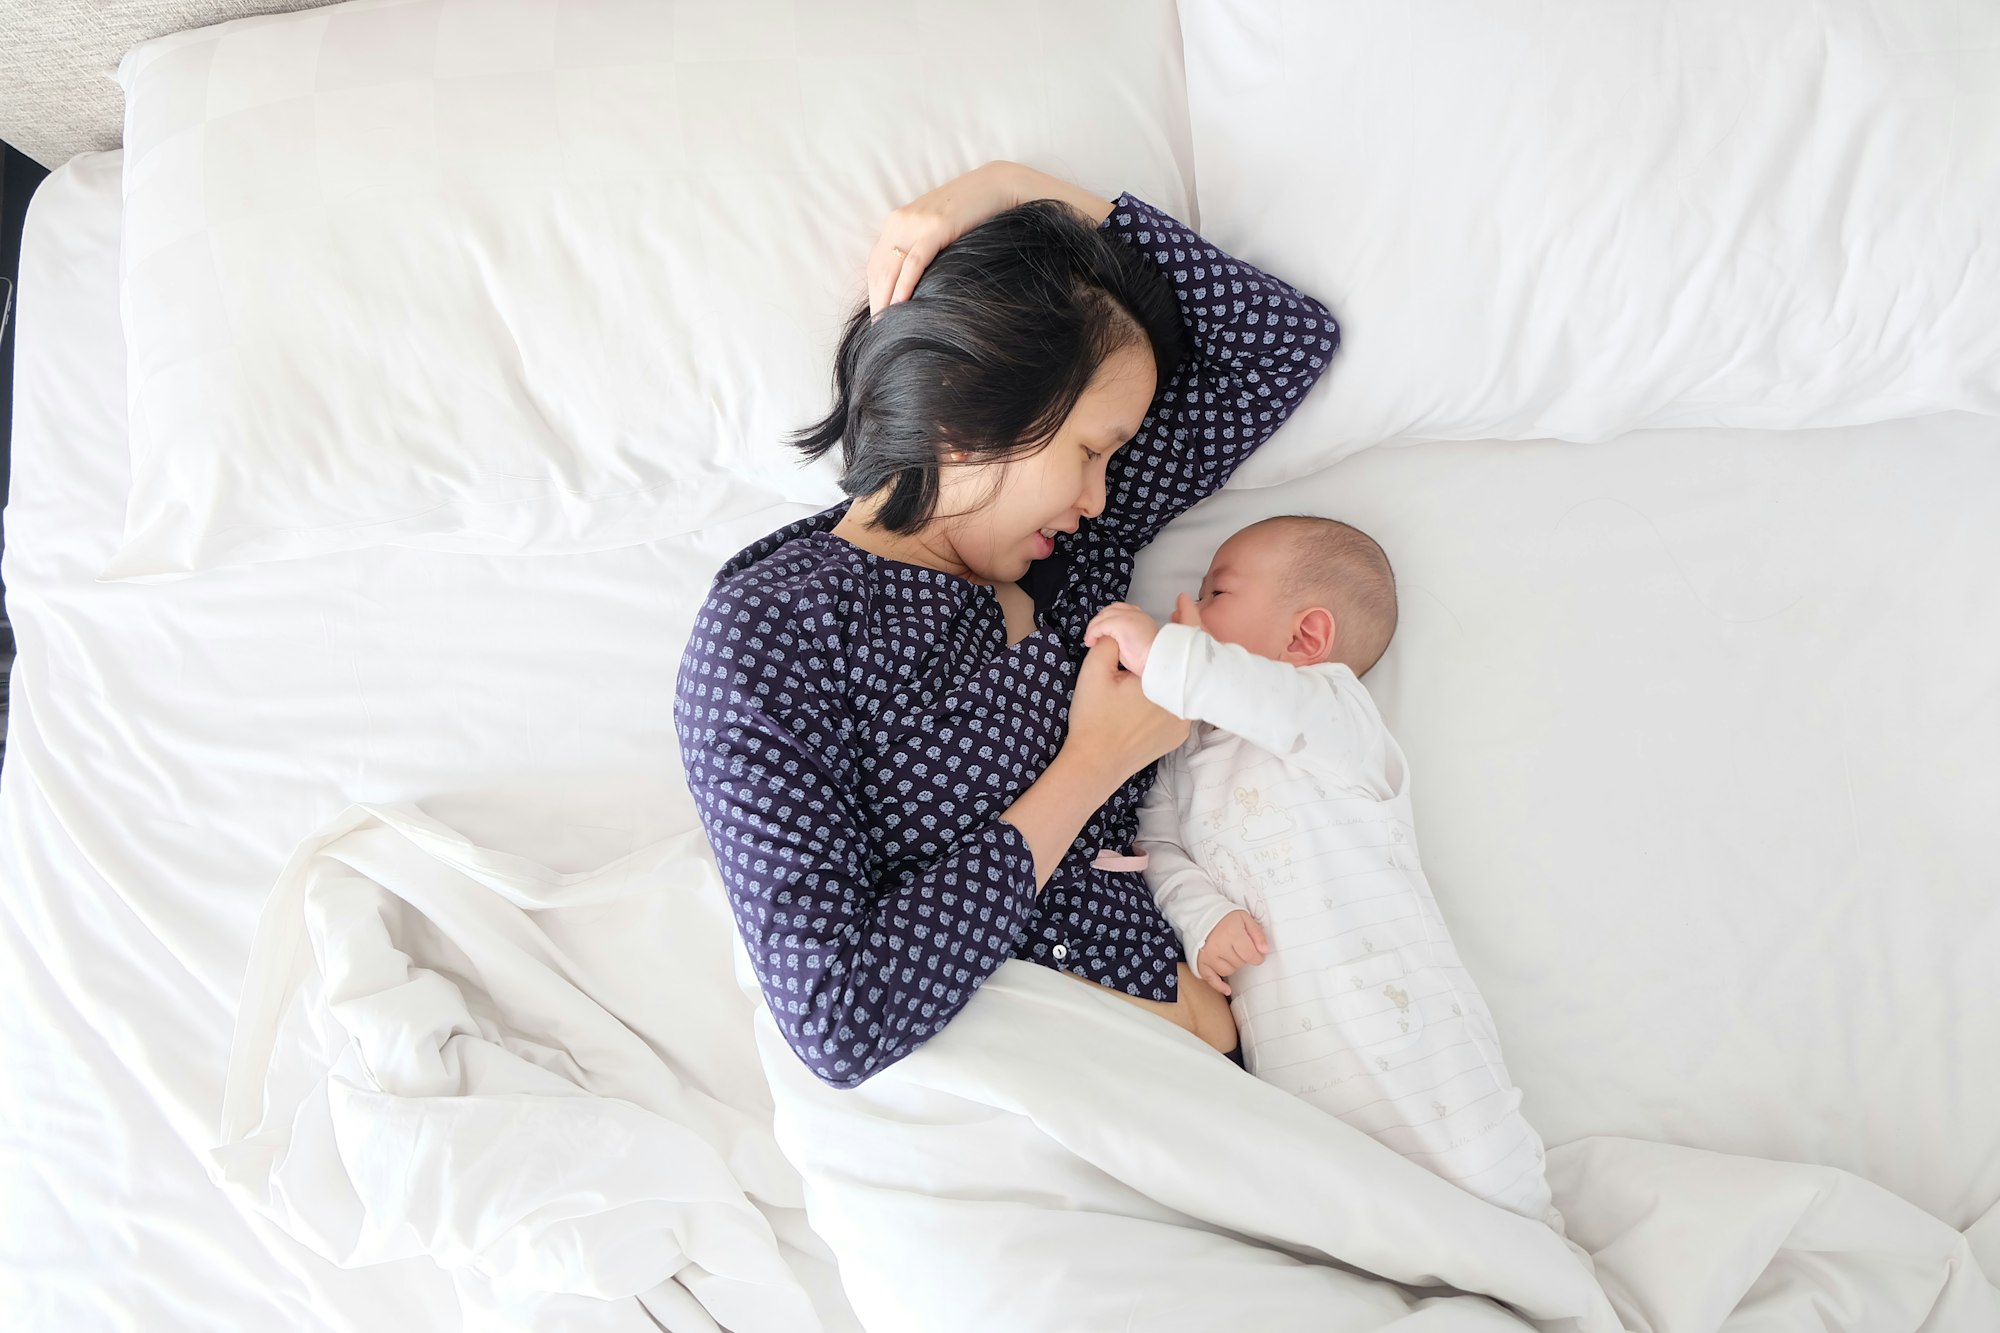 breastfeeding, lying and breastfeeding, nursing in bed